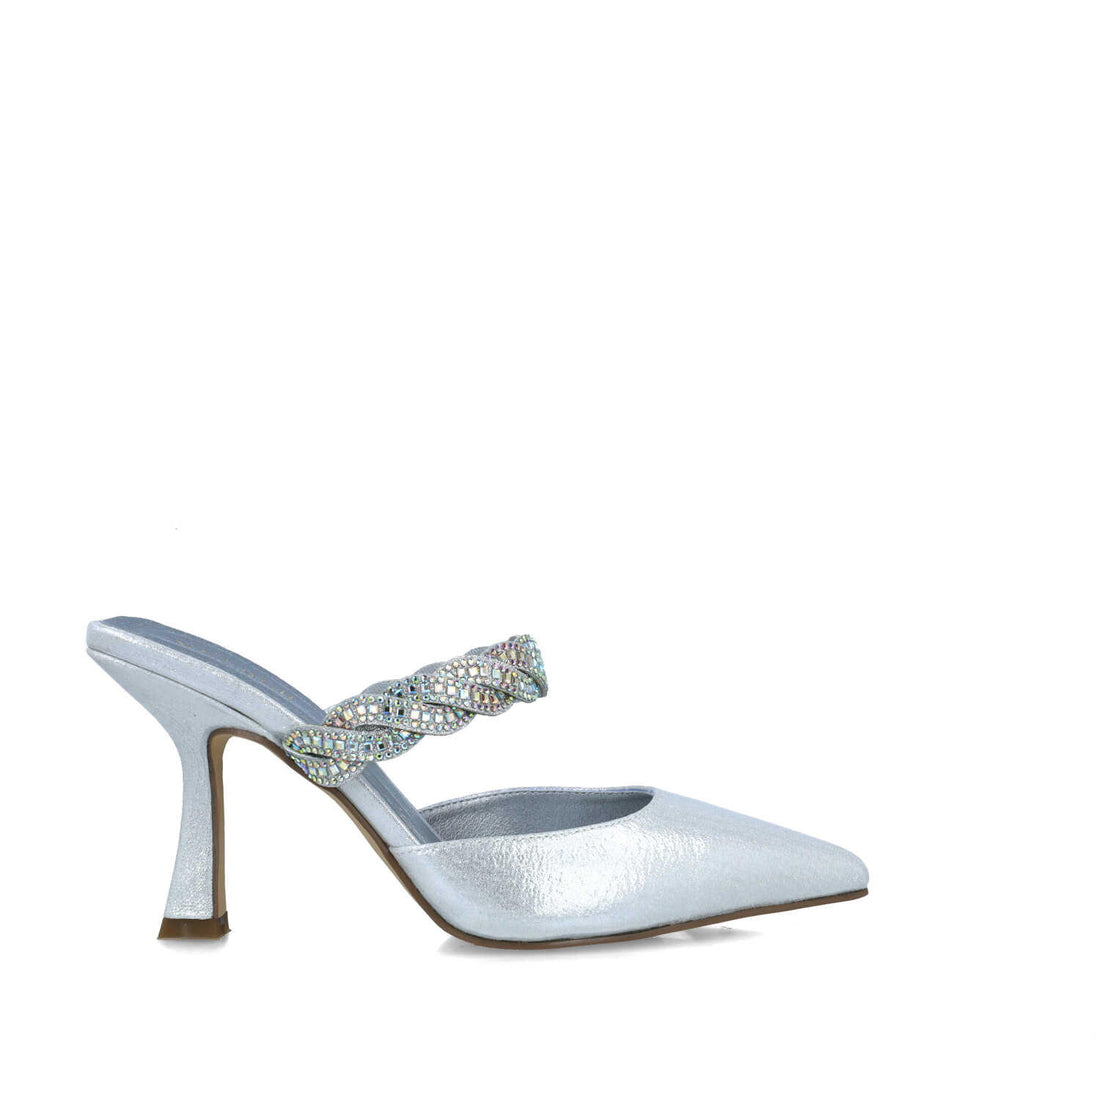 Silver Sandal With Embellished Strap_24795_09_01